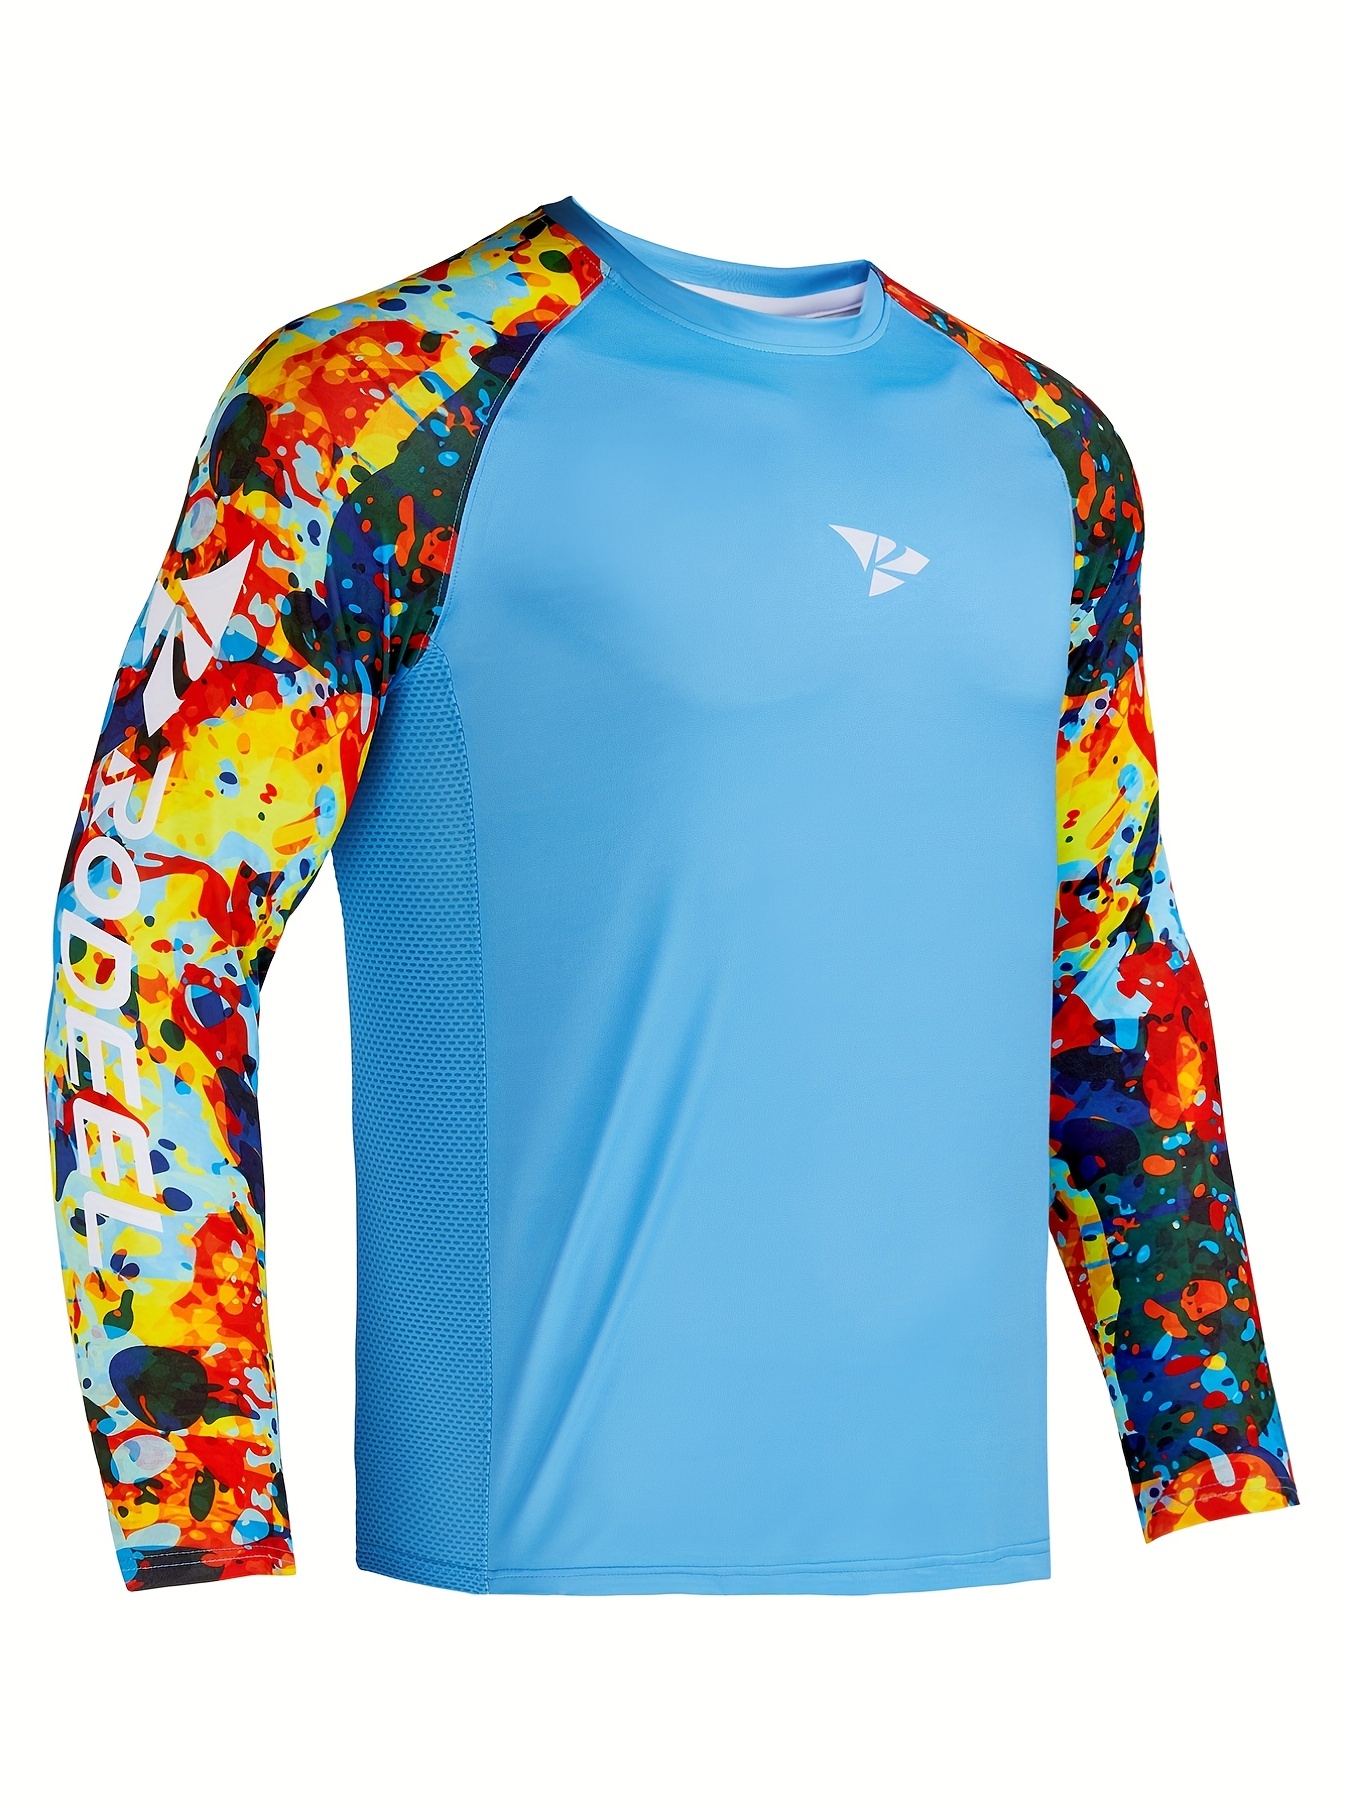 ZENGVEE 3 Pack Men's Sun Protection Long Sleeve Fishing Shirts UPF 50+  Quick Dry Swim Shirts Rash Guard for Men  Hiking,Athletic,Running,Workout,Outdoor Shirts(0618-Haze Blue White Gray-S)